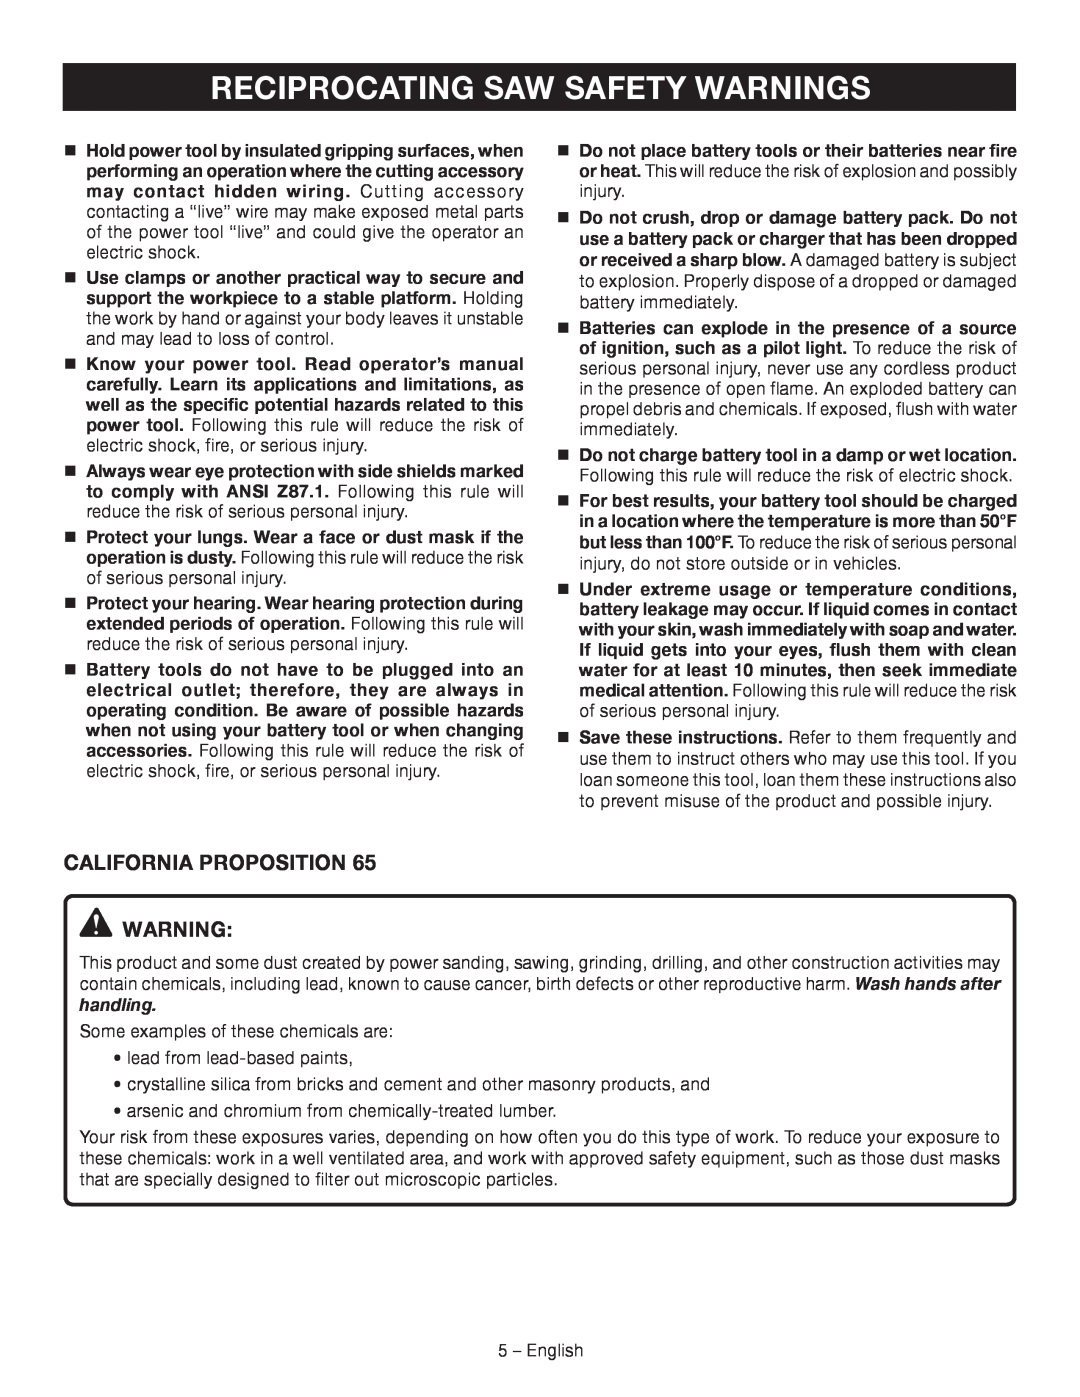 Ryobi P514 manuel dutilisation Reciprocating Saw Safety Warnings, California Proposition 